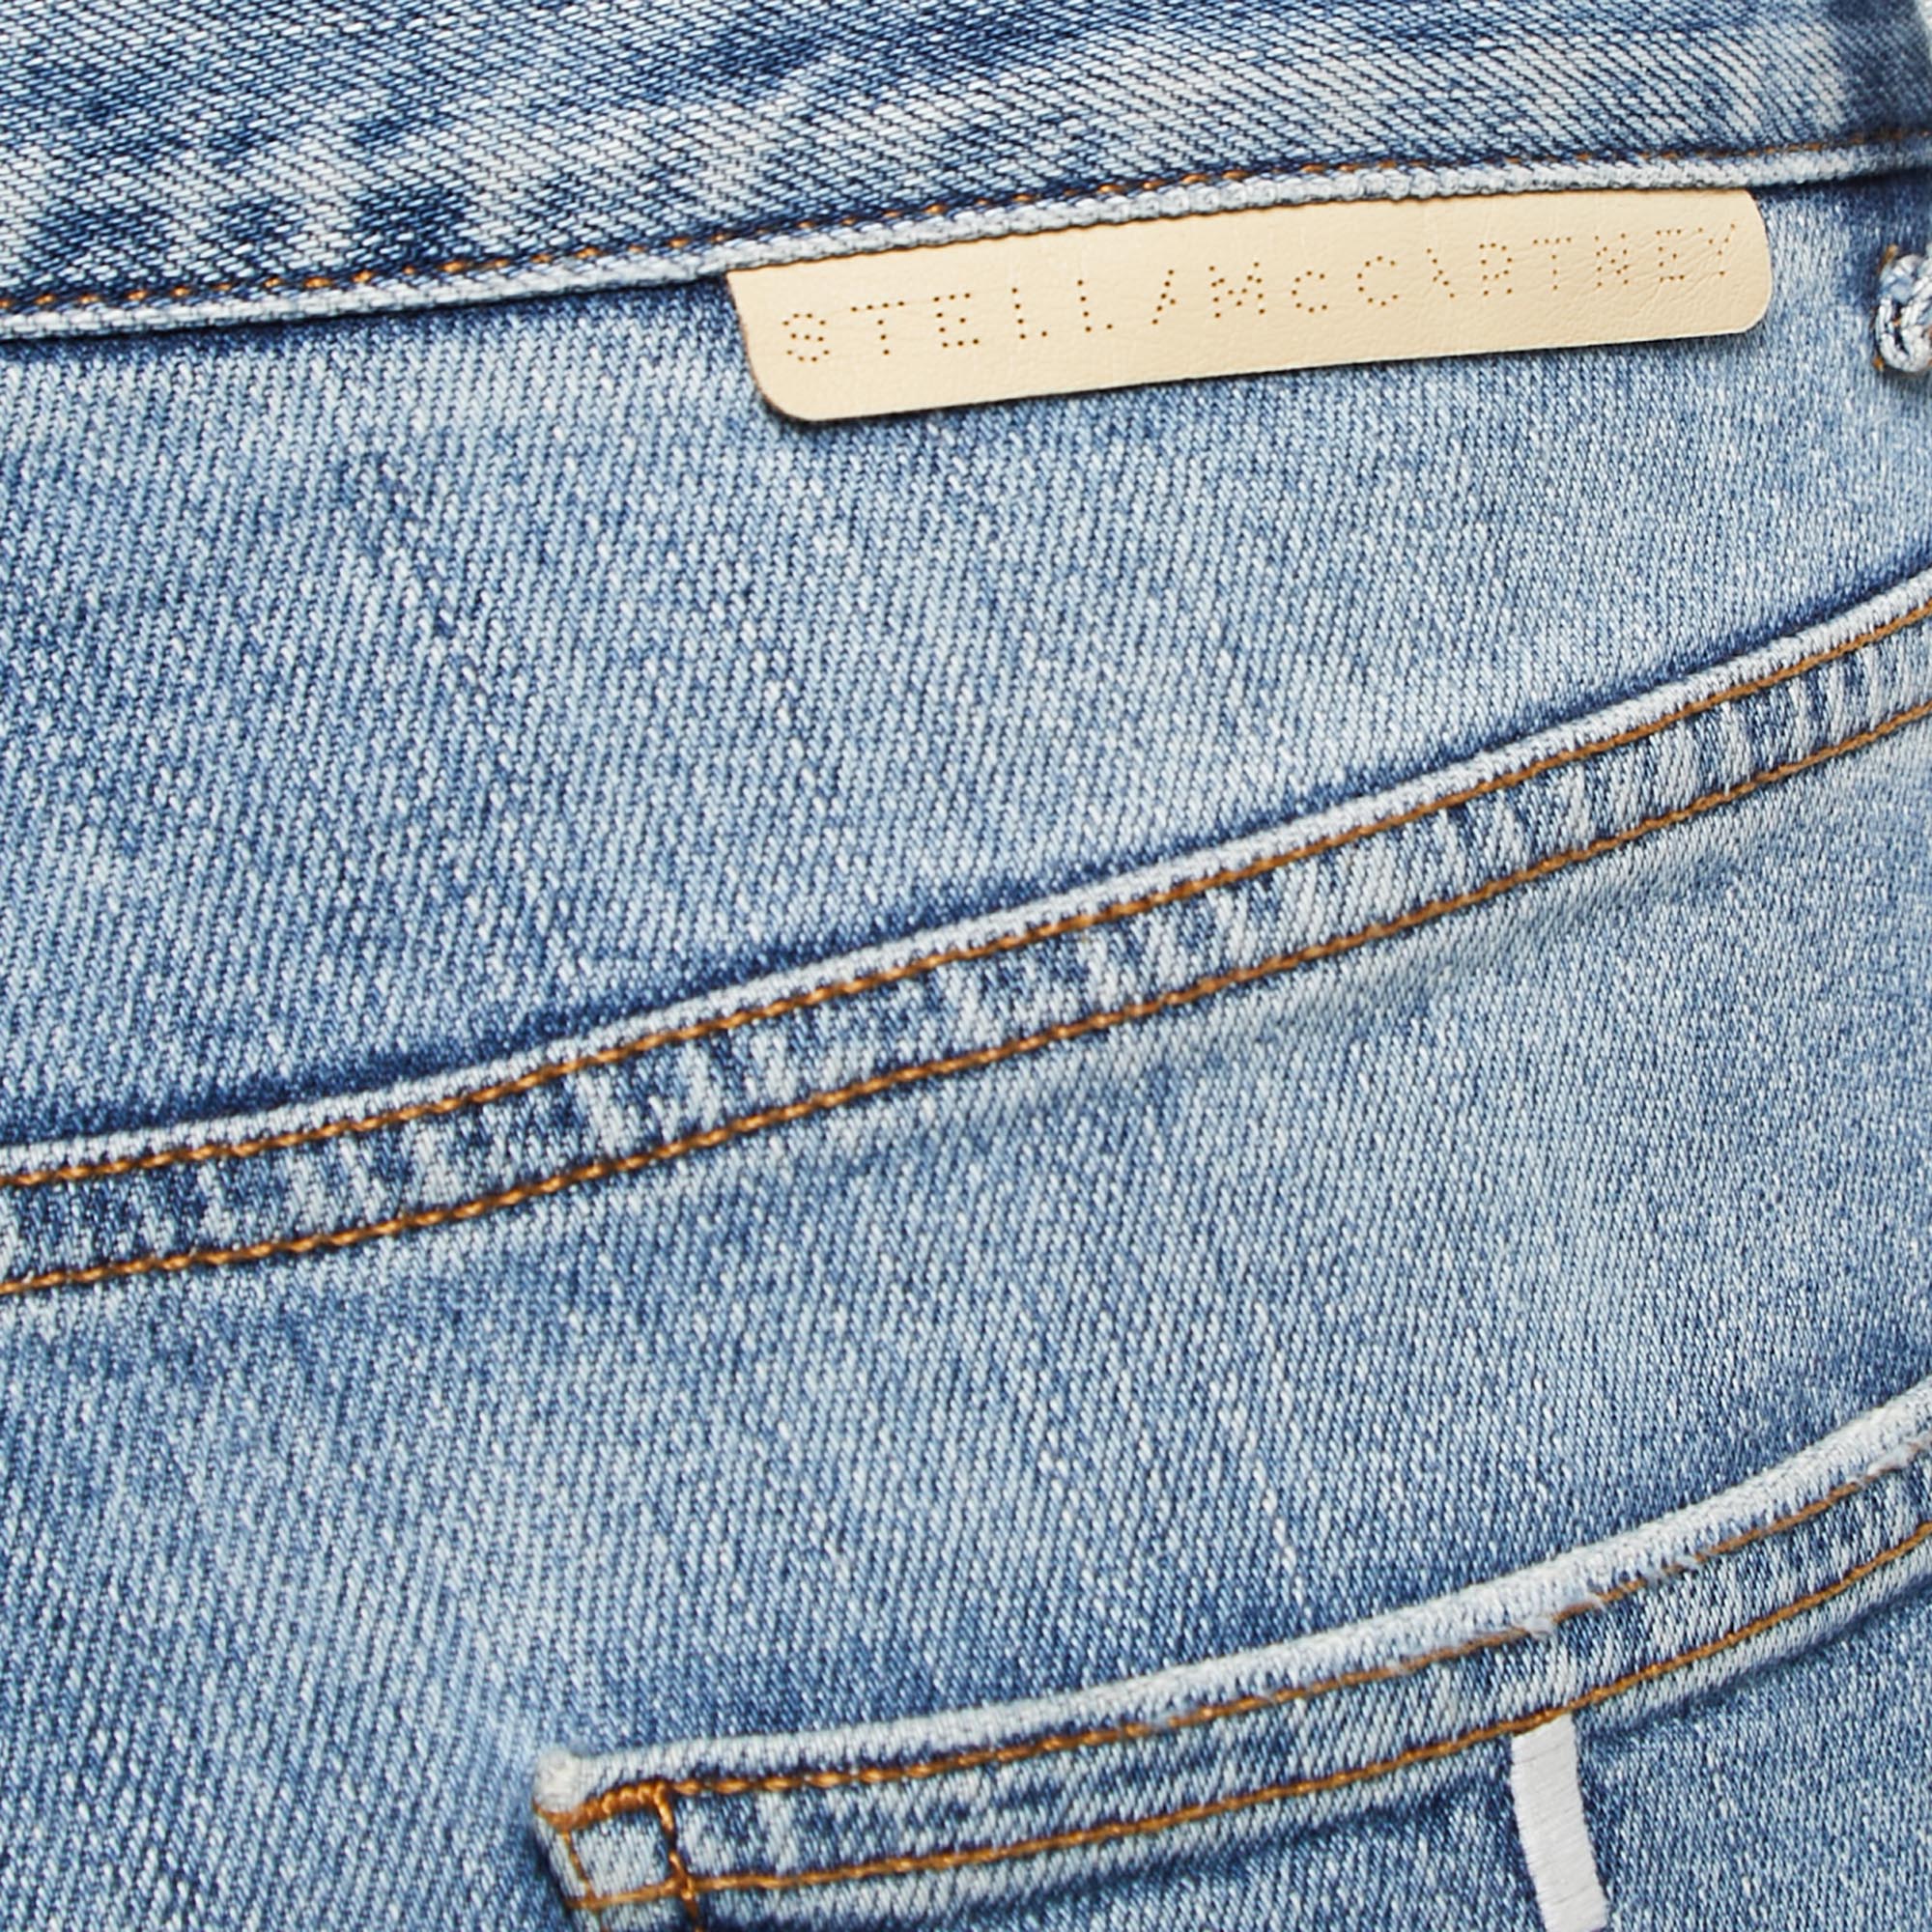 Stella McCartney Blue Washed & Distressed Denim Jeans S Waist 27